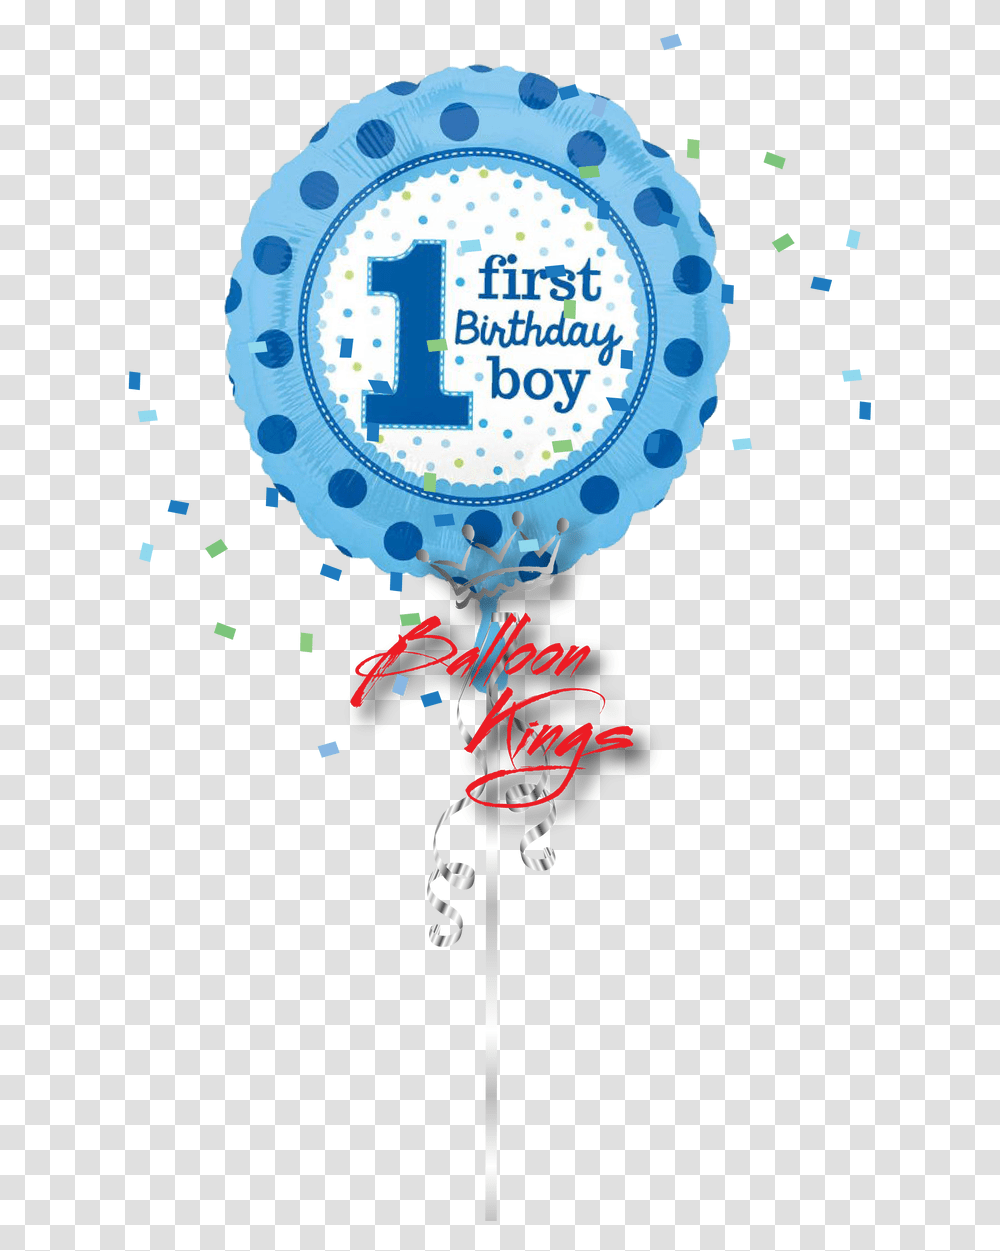 1st Birthday Boy Balloon Kings 1st Birthday First Birthday, Graphics, Art, Paper, Clock Tower Transparent Png